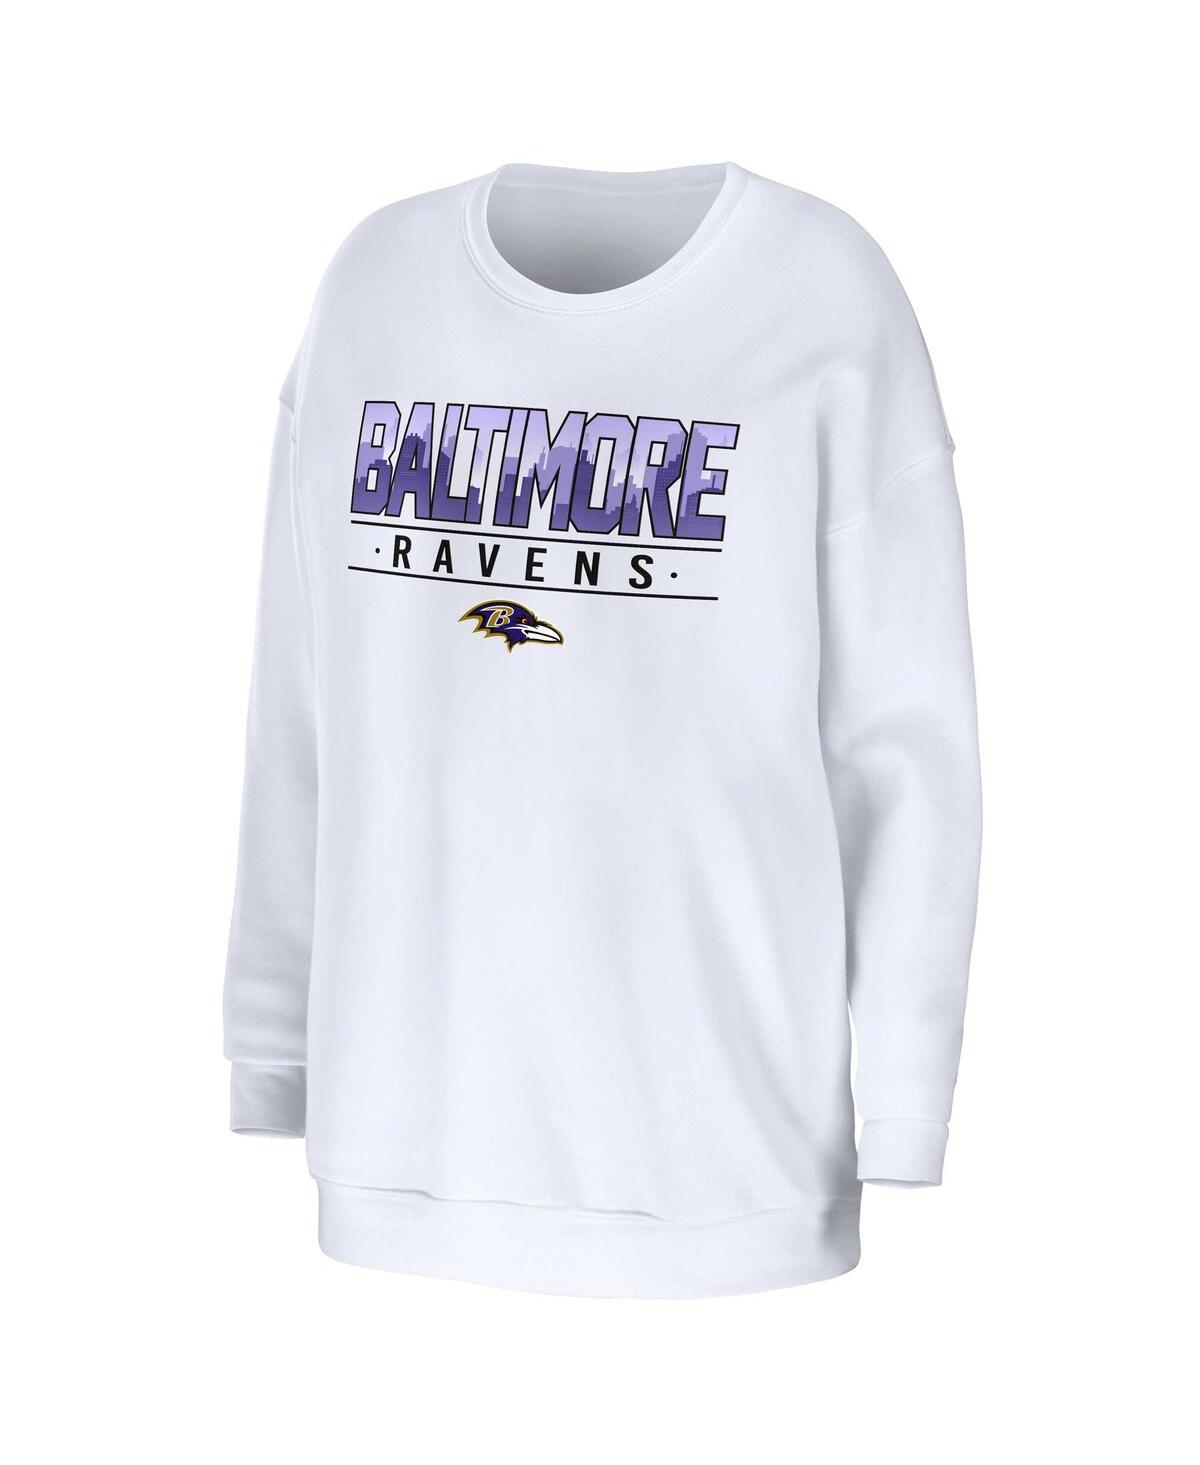 Shop Wear By Erin Andrews Women's  White Baltimore Ravens Domestic Pullover Sweatshirt